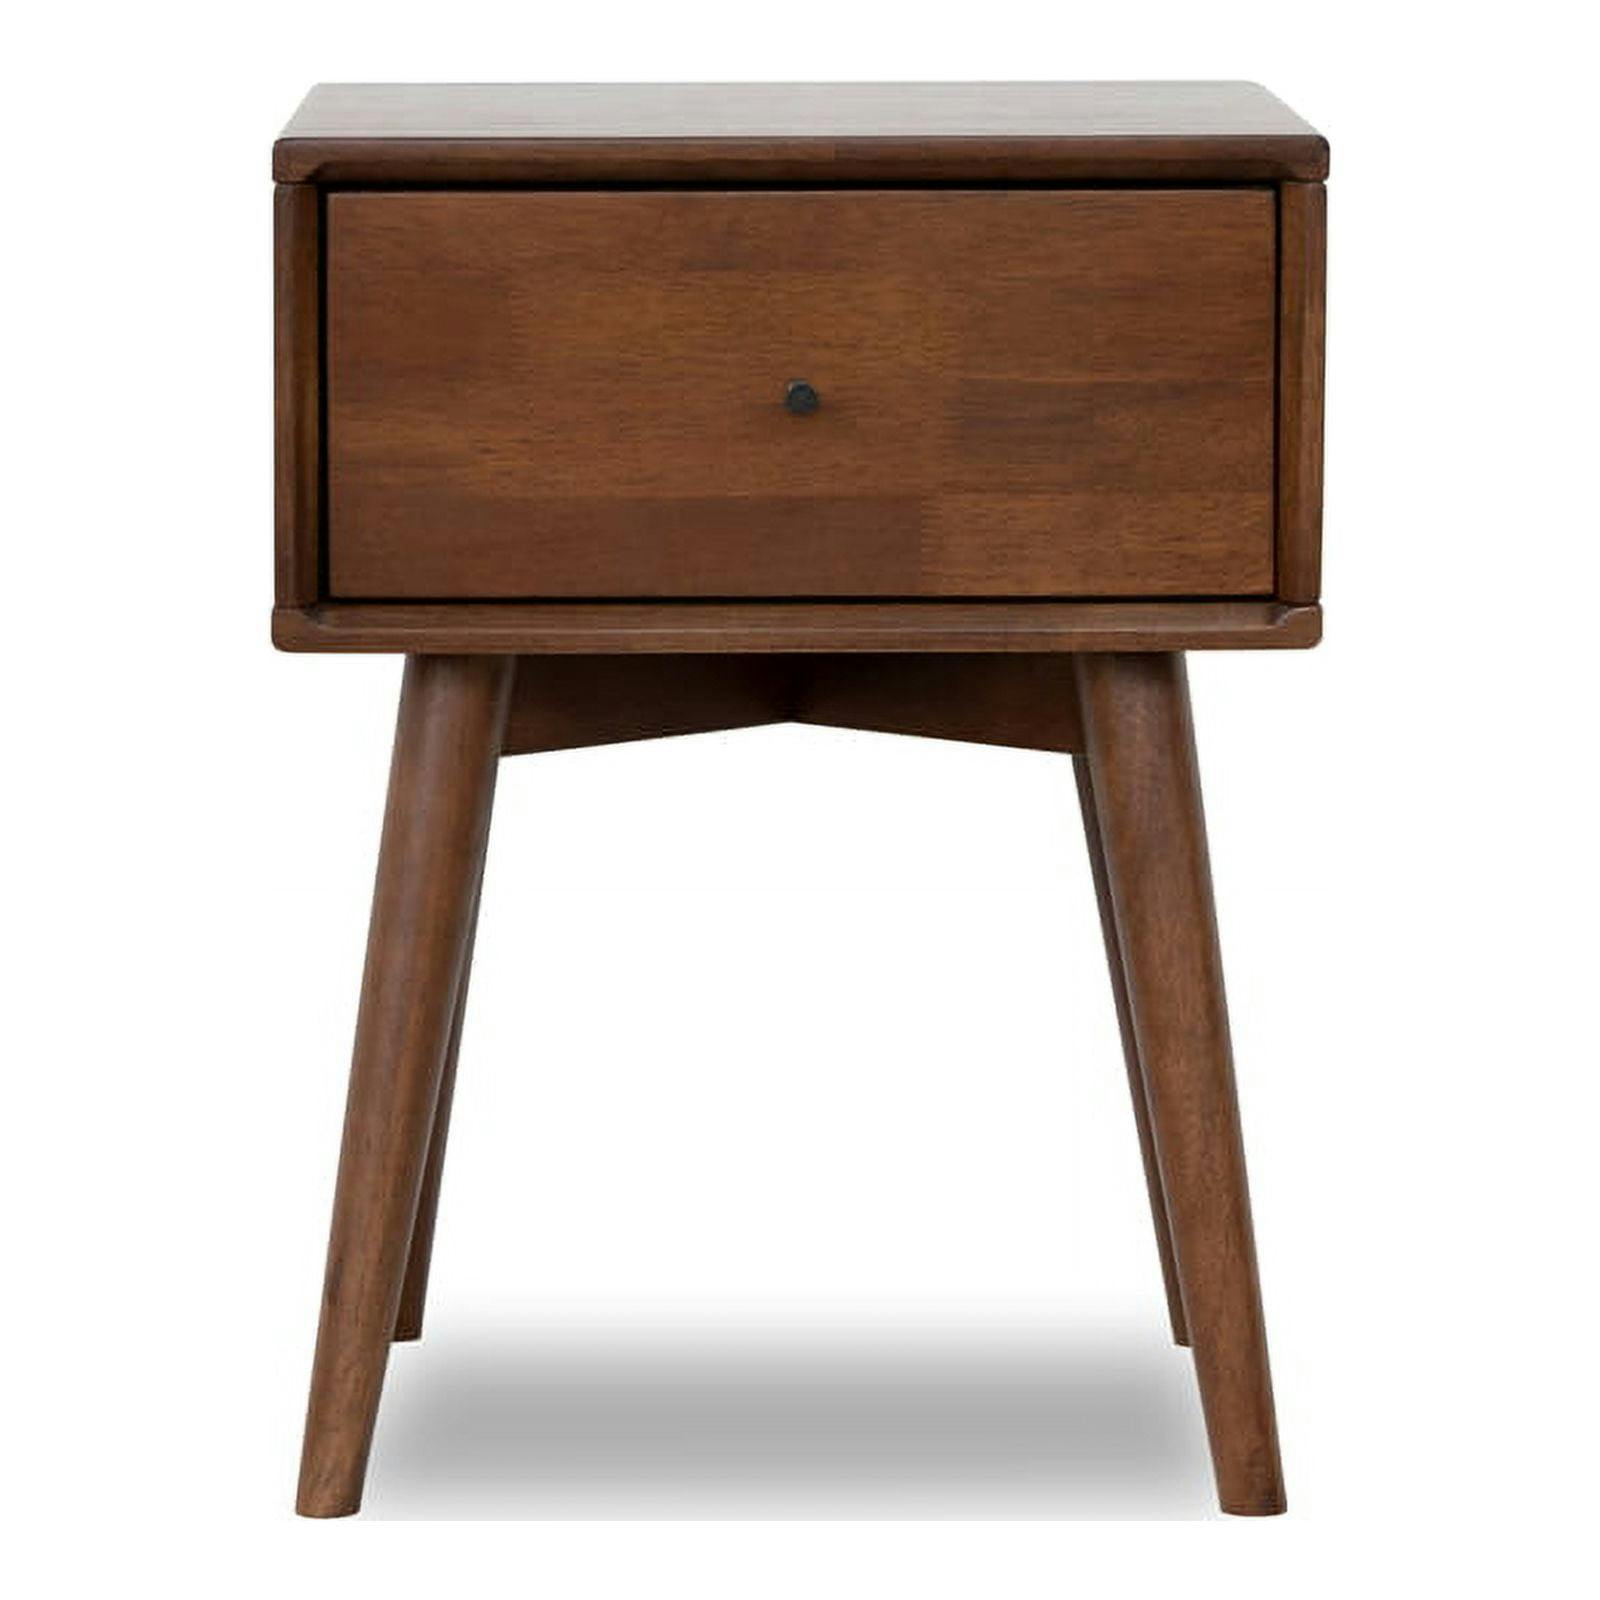 Avery Mid-Century Modern Brown Walnut Wood Nightstand with Storage Drawer